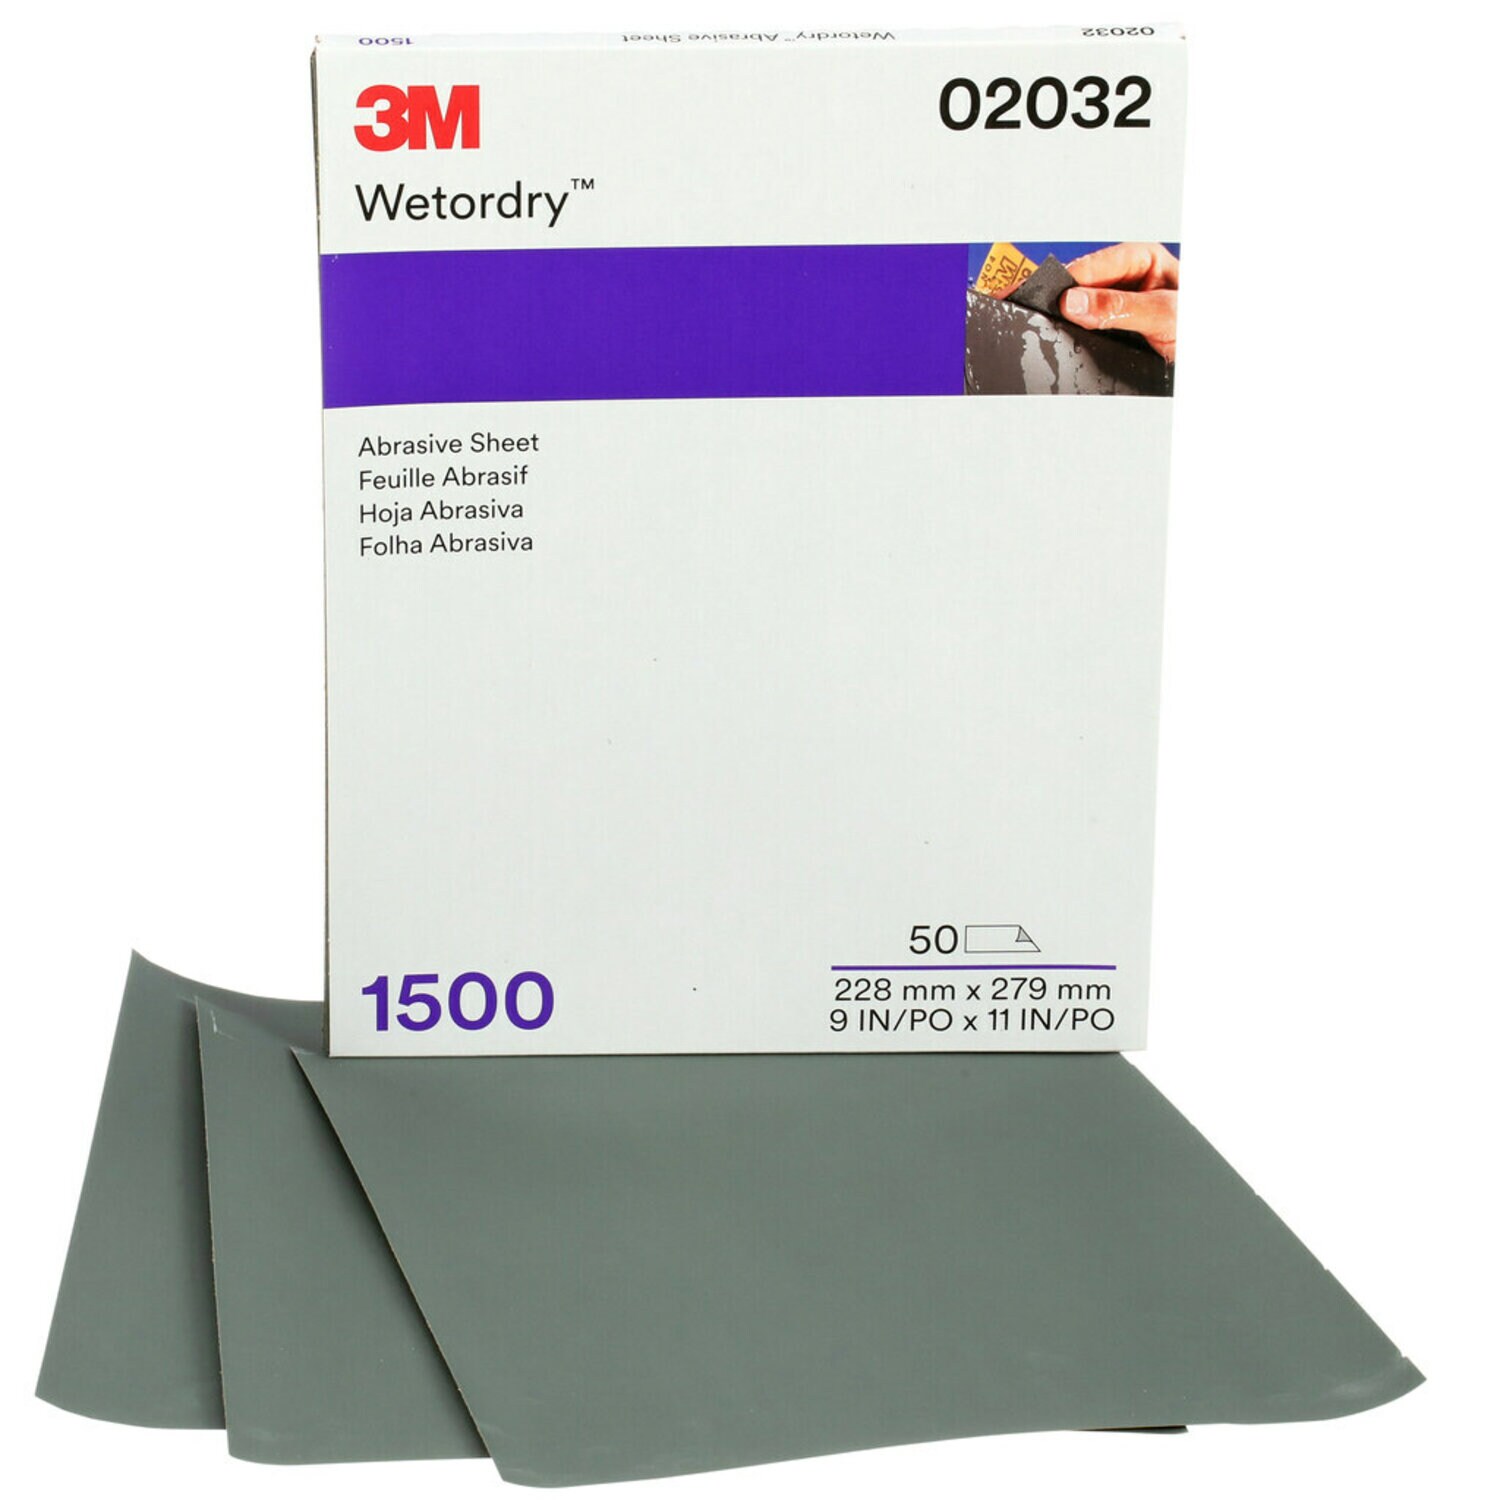 7100045849 - 3M Wetordry Abrasive Sheet, 02032, 9 in x 11 in, 1500 grade, 50 sheets
per carton, 5 cartons per case